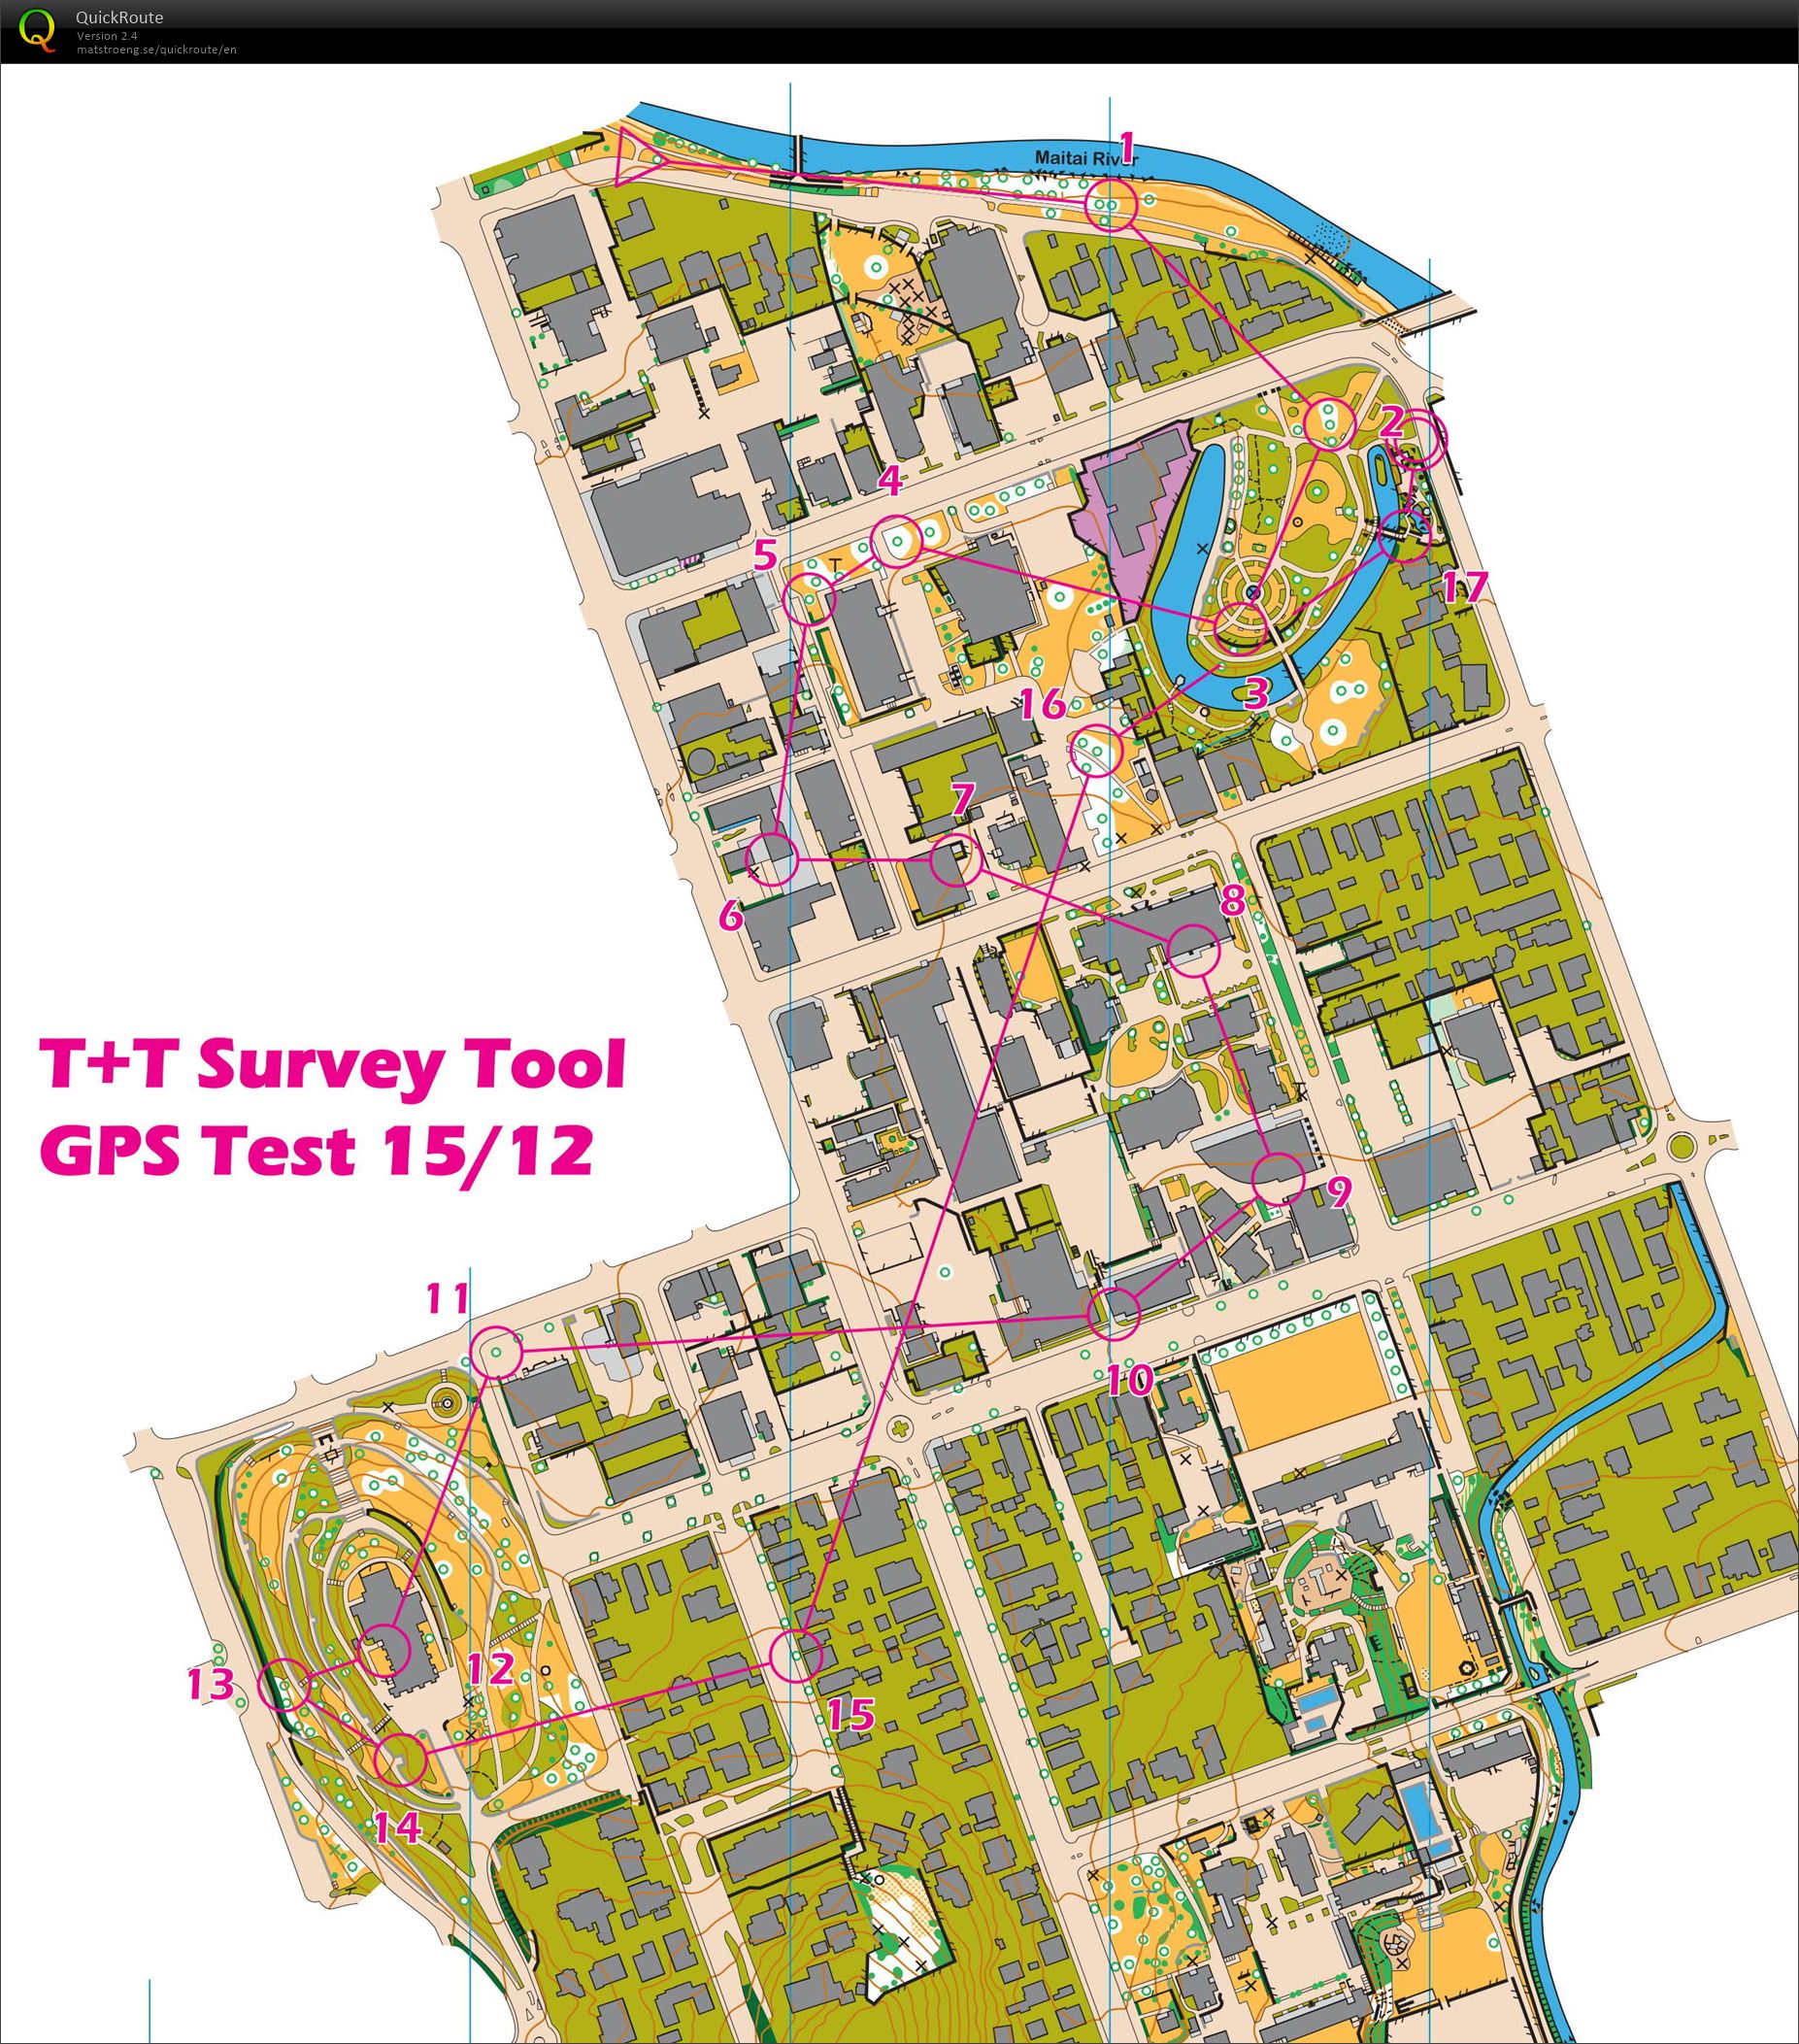 T+T Survey Tool Test (14/12/2020)